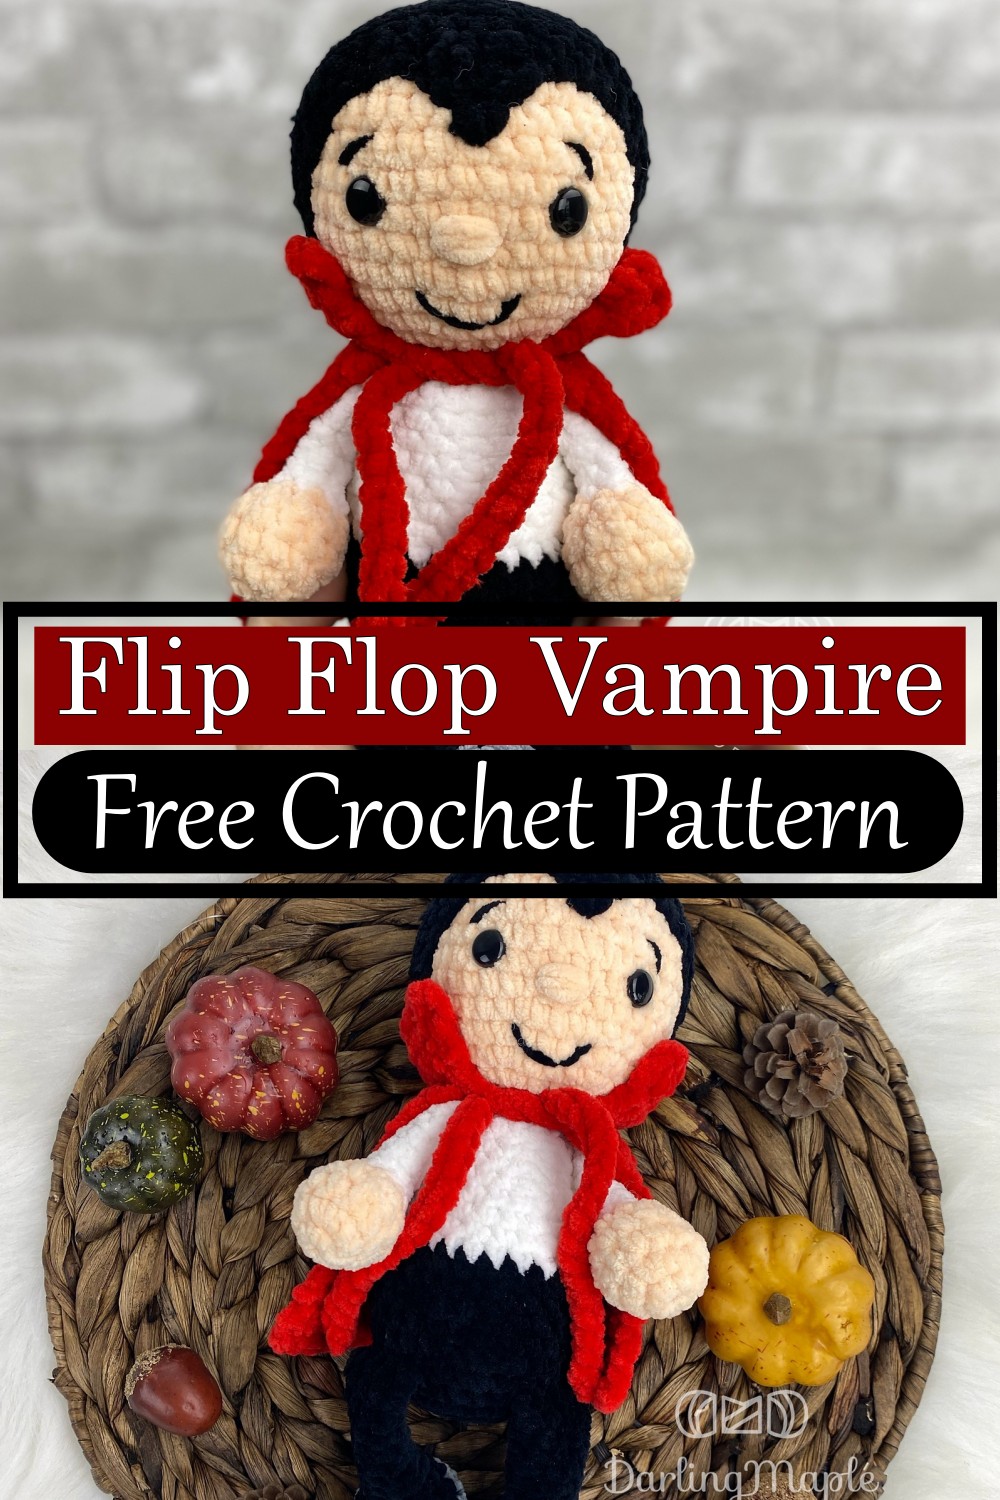 Flip Flop Vampire